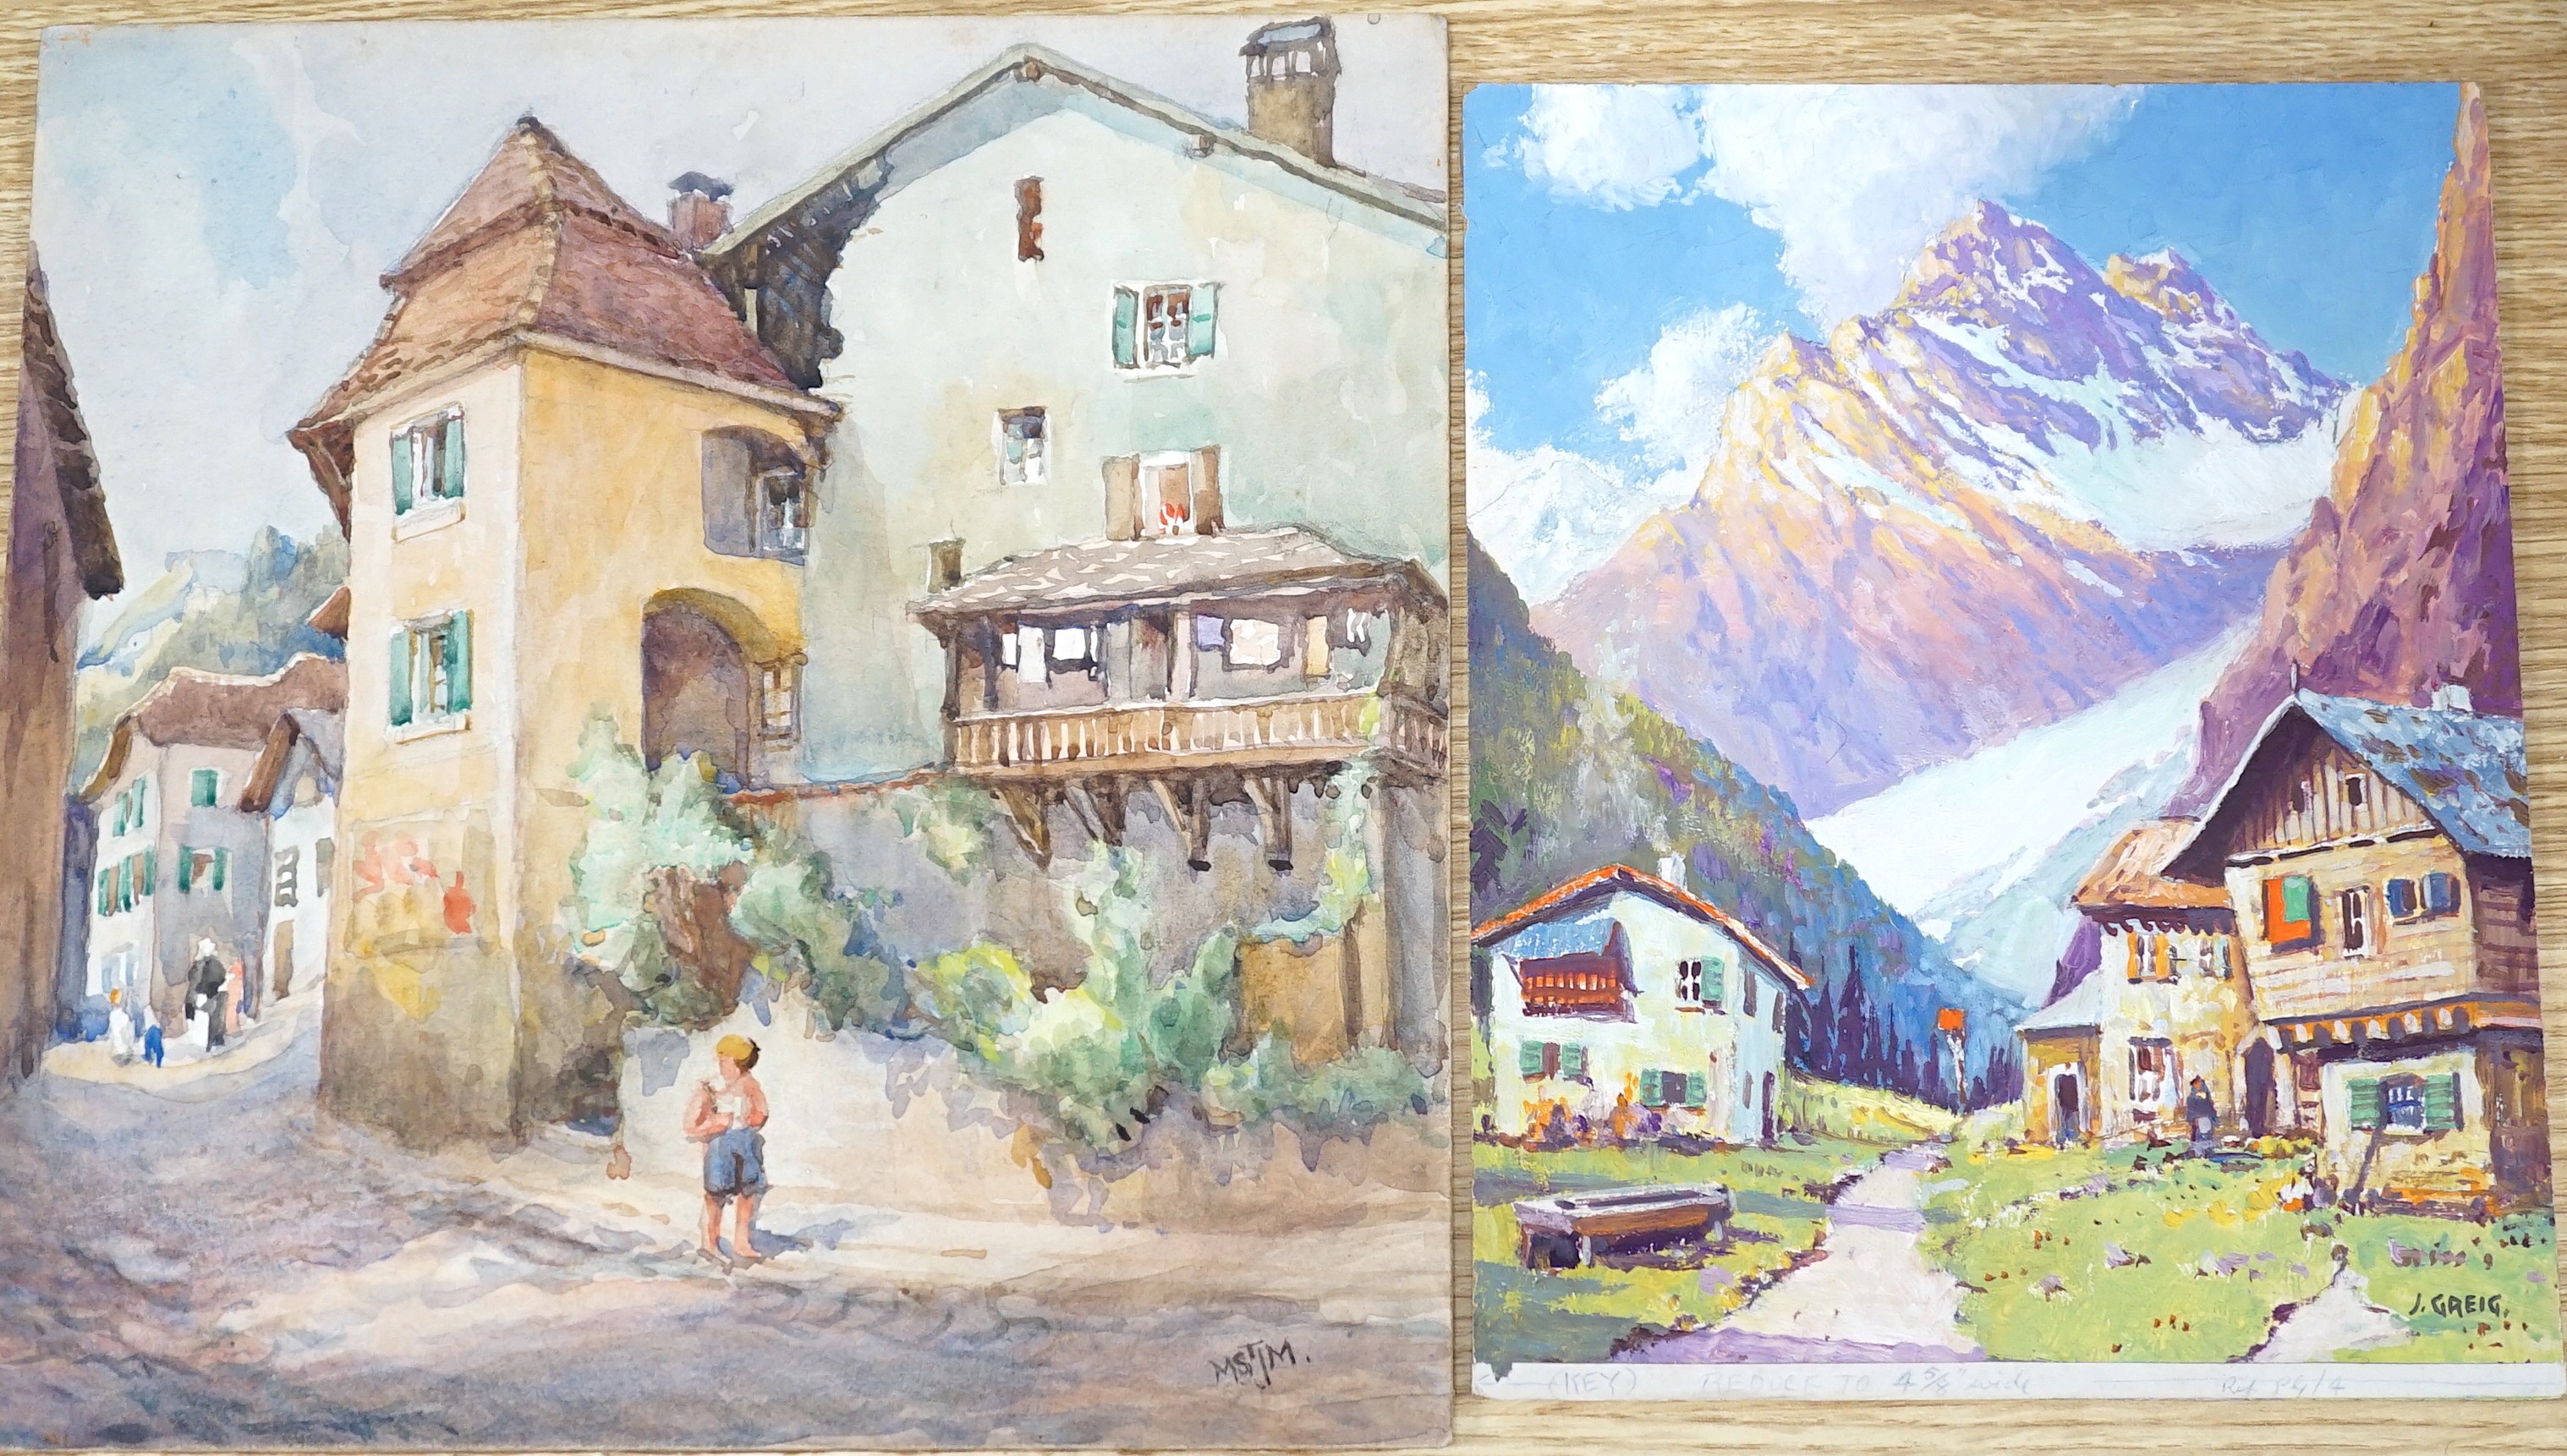 James Greig (1861-1941), oil on board, Swiss alpine scene, signed, 24 x 19cm and a Mabel St John Mildmay watercolour of Veytaux, Switzerland, 27 x 27cm, both unframed